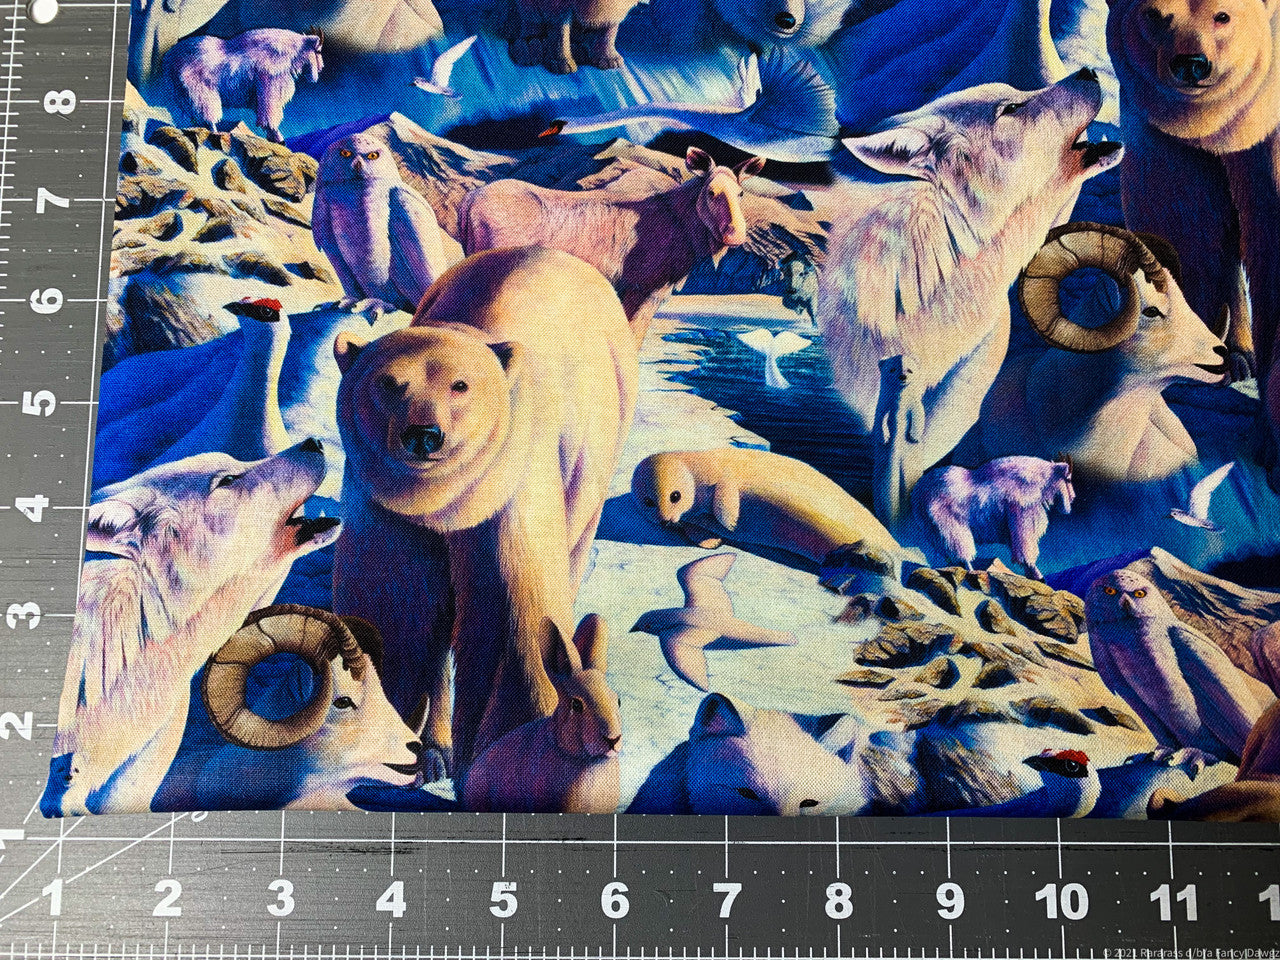 Animal fabric 4529 wolf fabric